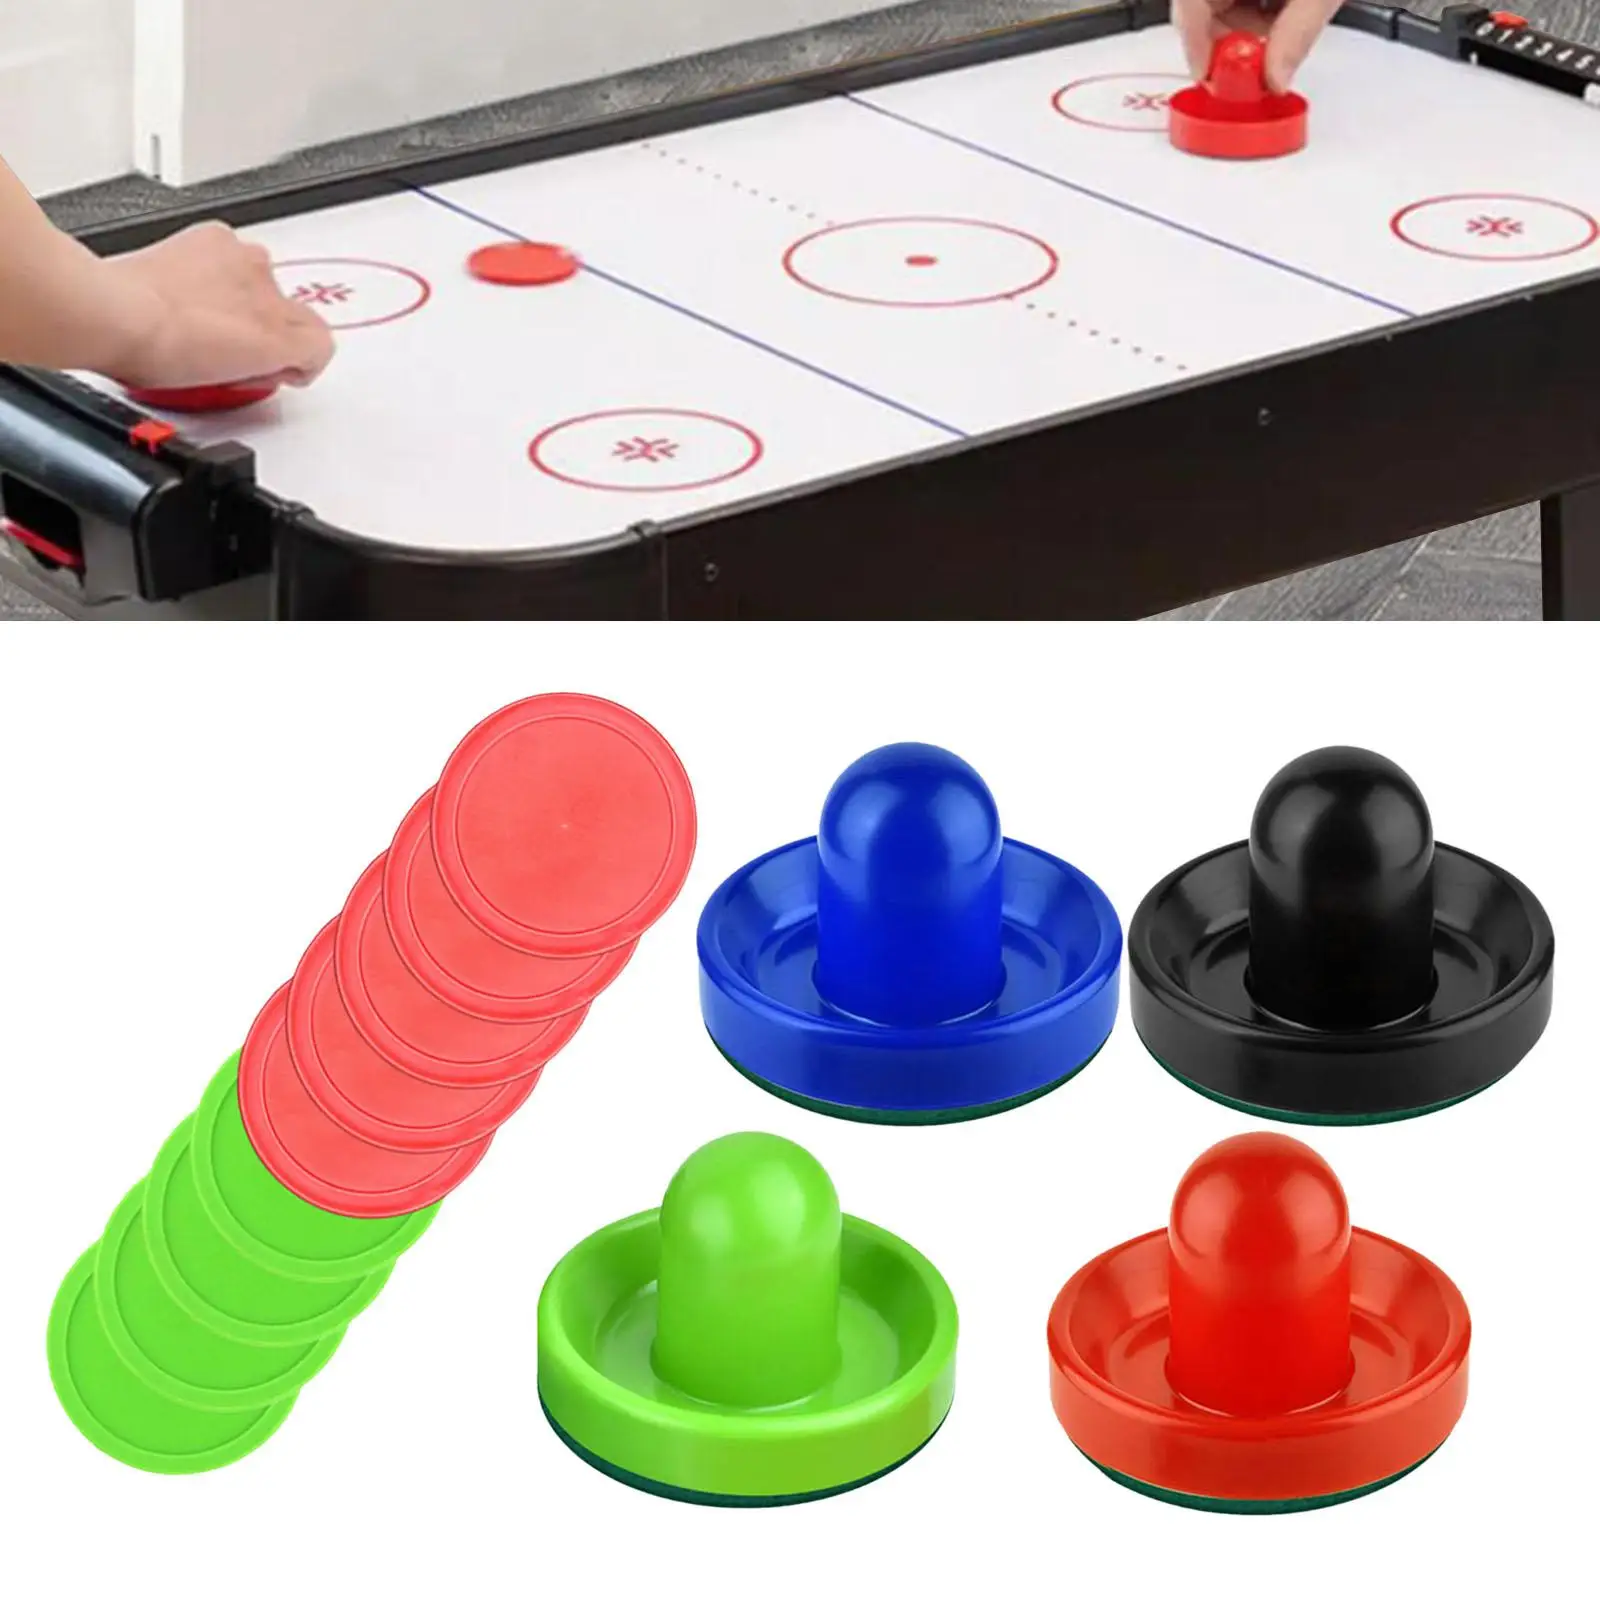 4 Colors Air Hockey Pushers and 8 Pucks 2.5 inch Air Hockey Pucks for Family